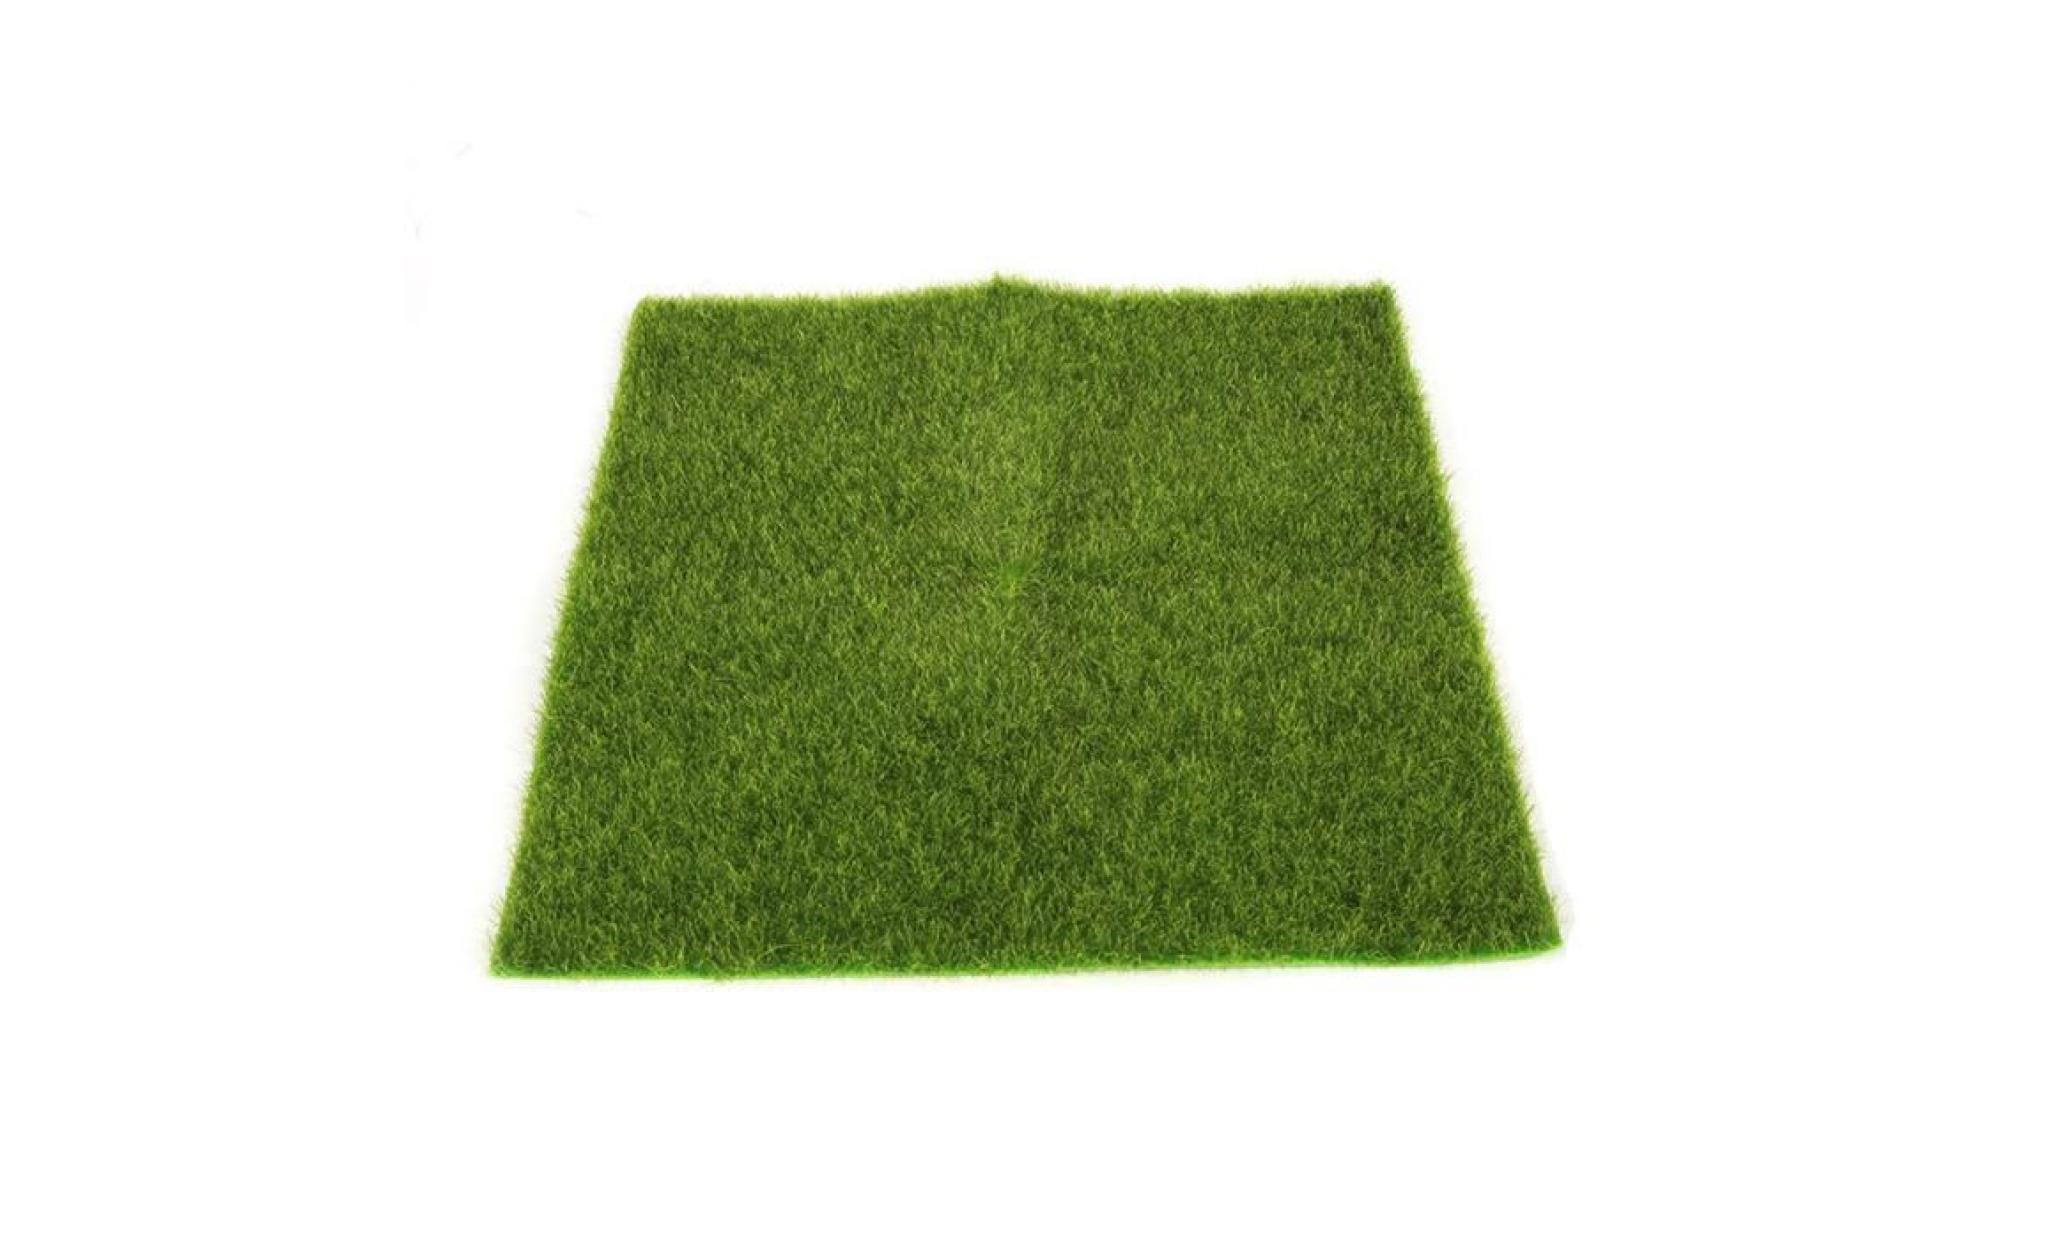 mosakog® faux gazon artificiel jardin moss artisanat herbe miniature pelouse dollhouse décor vert_6177 pas cher